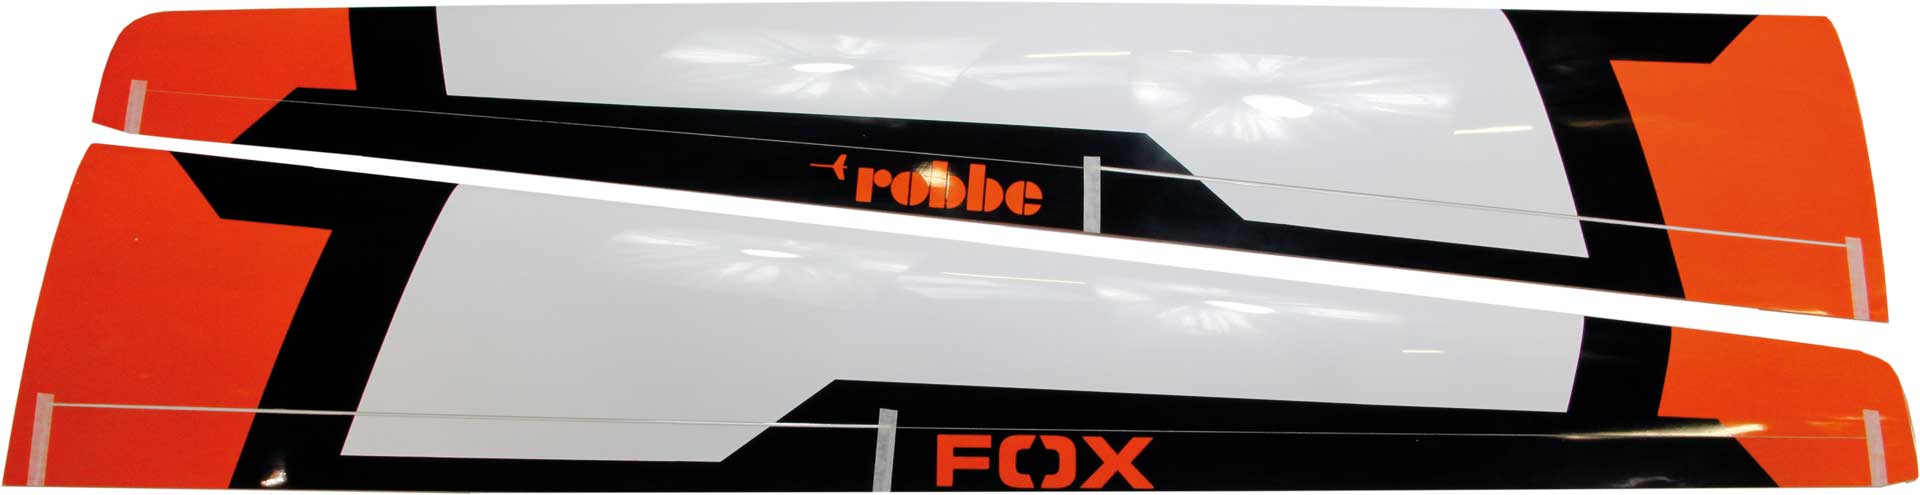 Robbe Modellsport Flächensatz MDM-1 FOX 3,5m ARF lackiert Orange SANS Servos